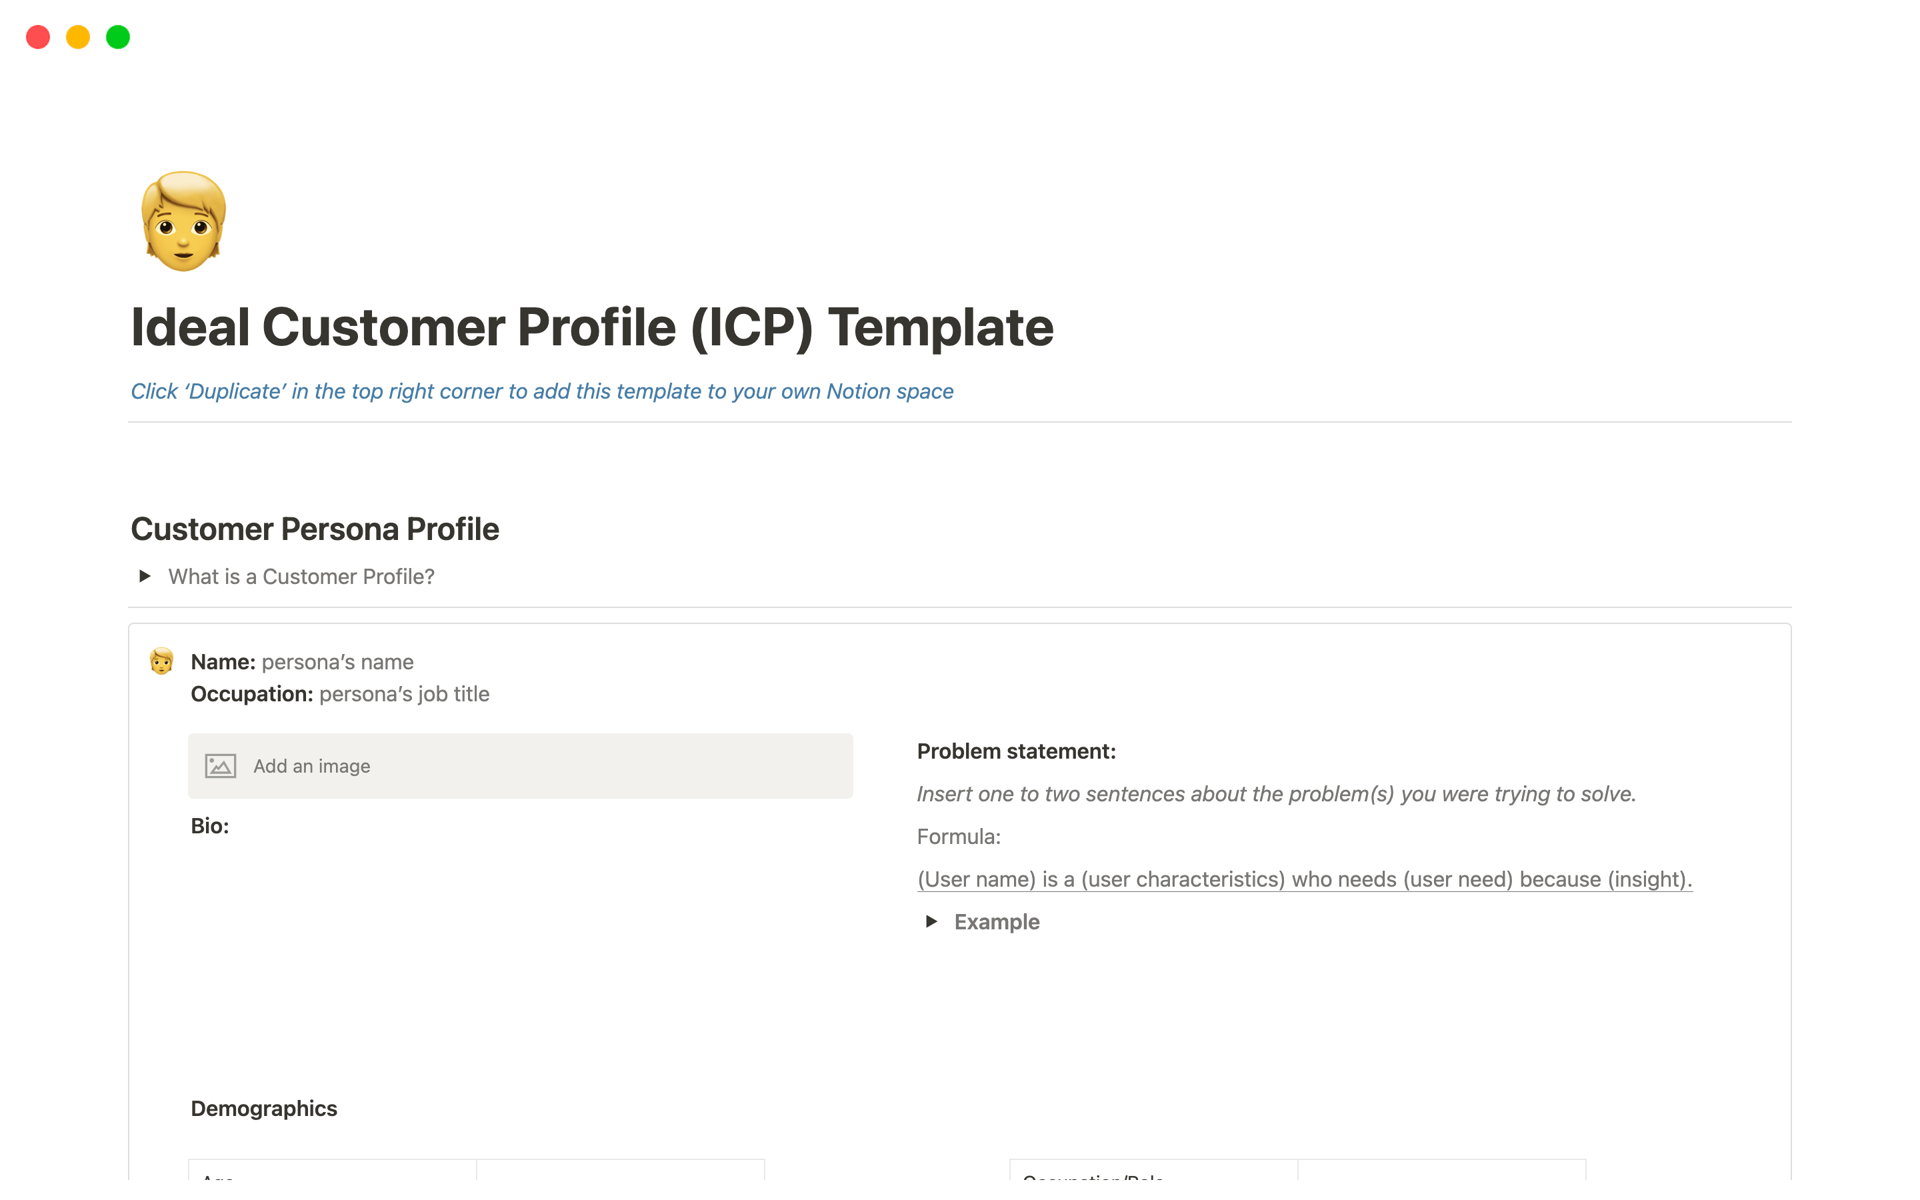 ideal-customer-profile-icp-template-appolica-startup-studio-desktop